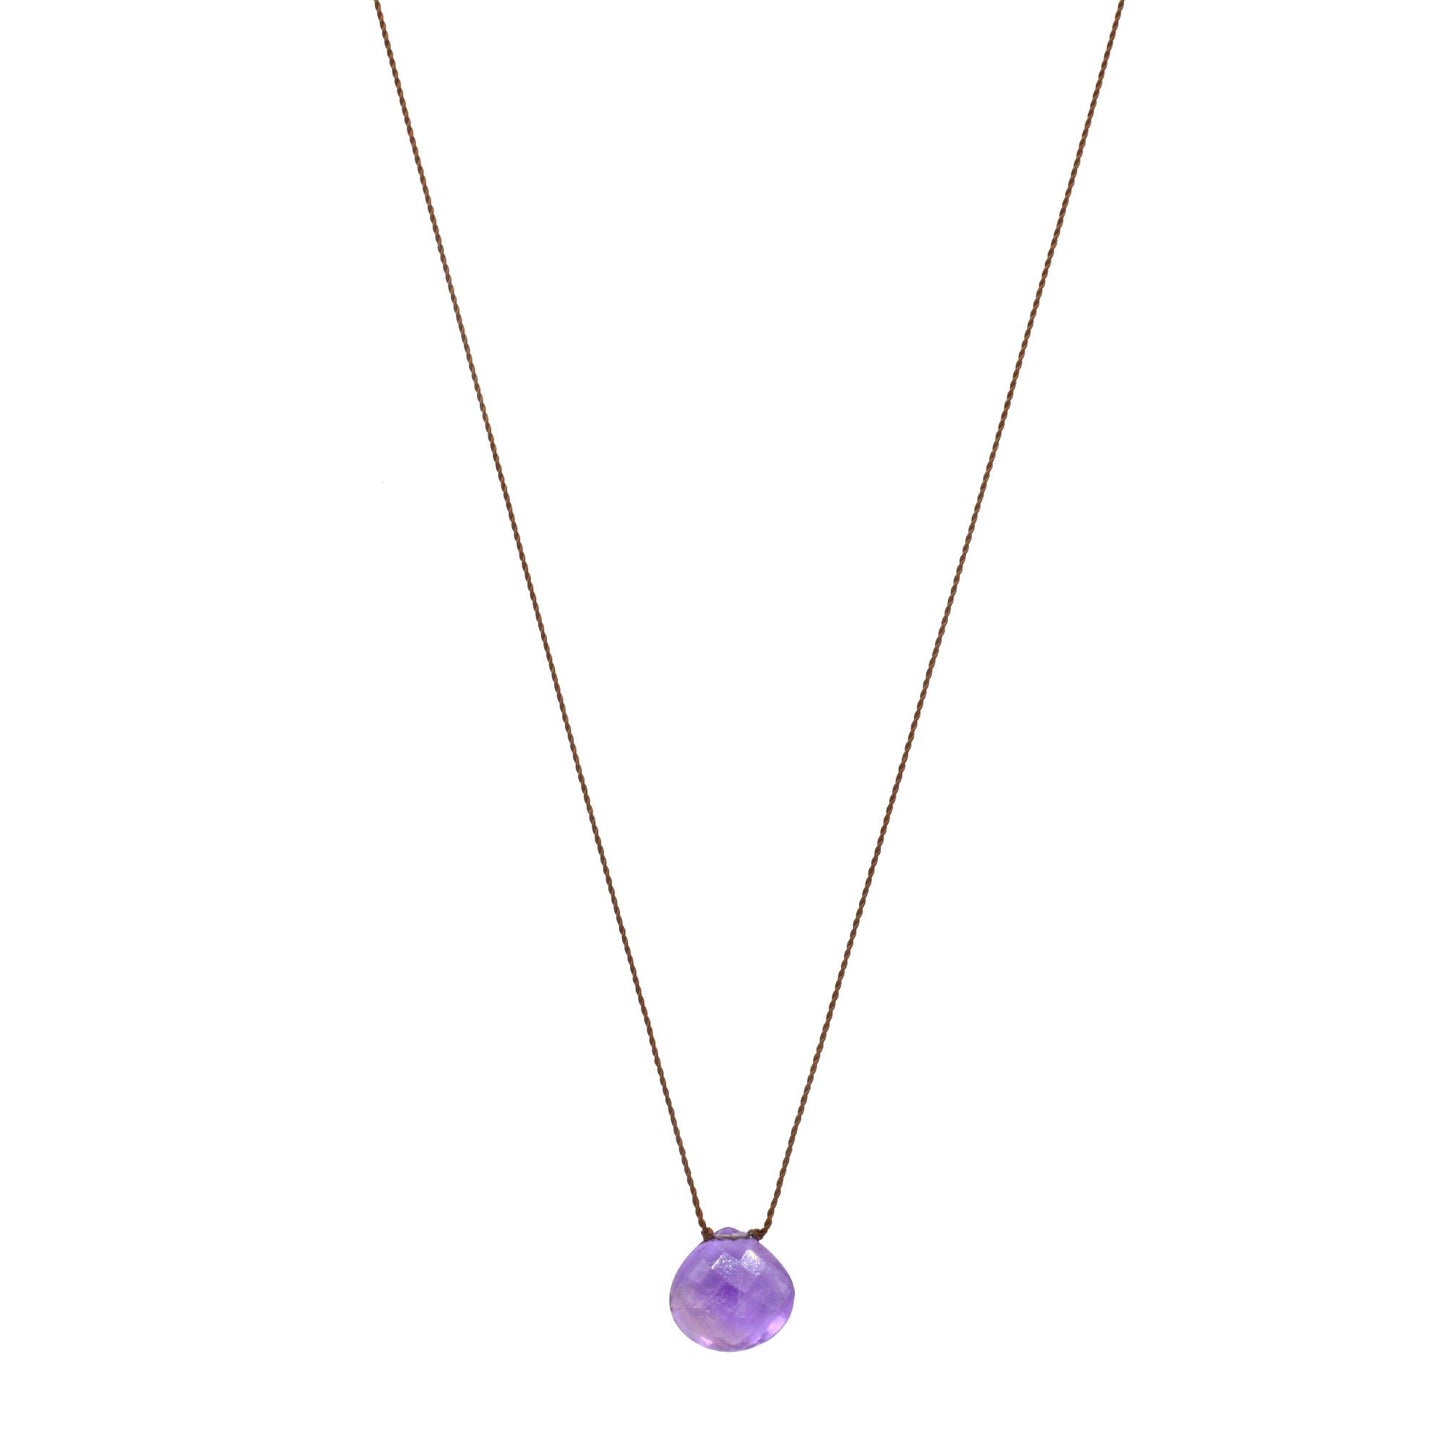 Margaret Solow Jewelry | Amethyst "Zen Gem" Necklace | Firecracker